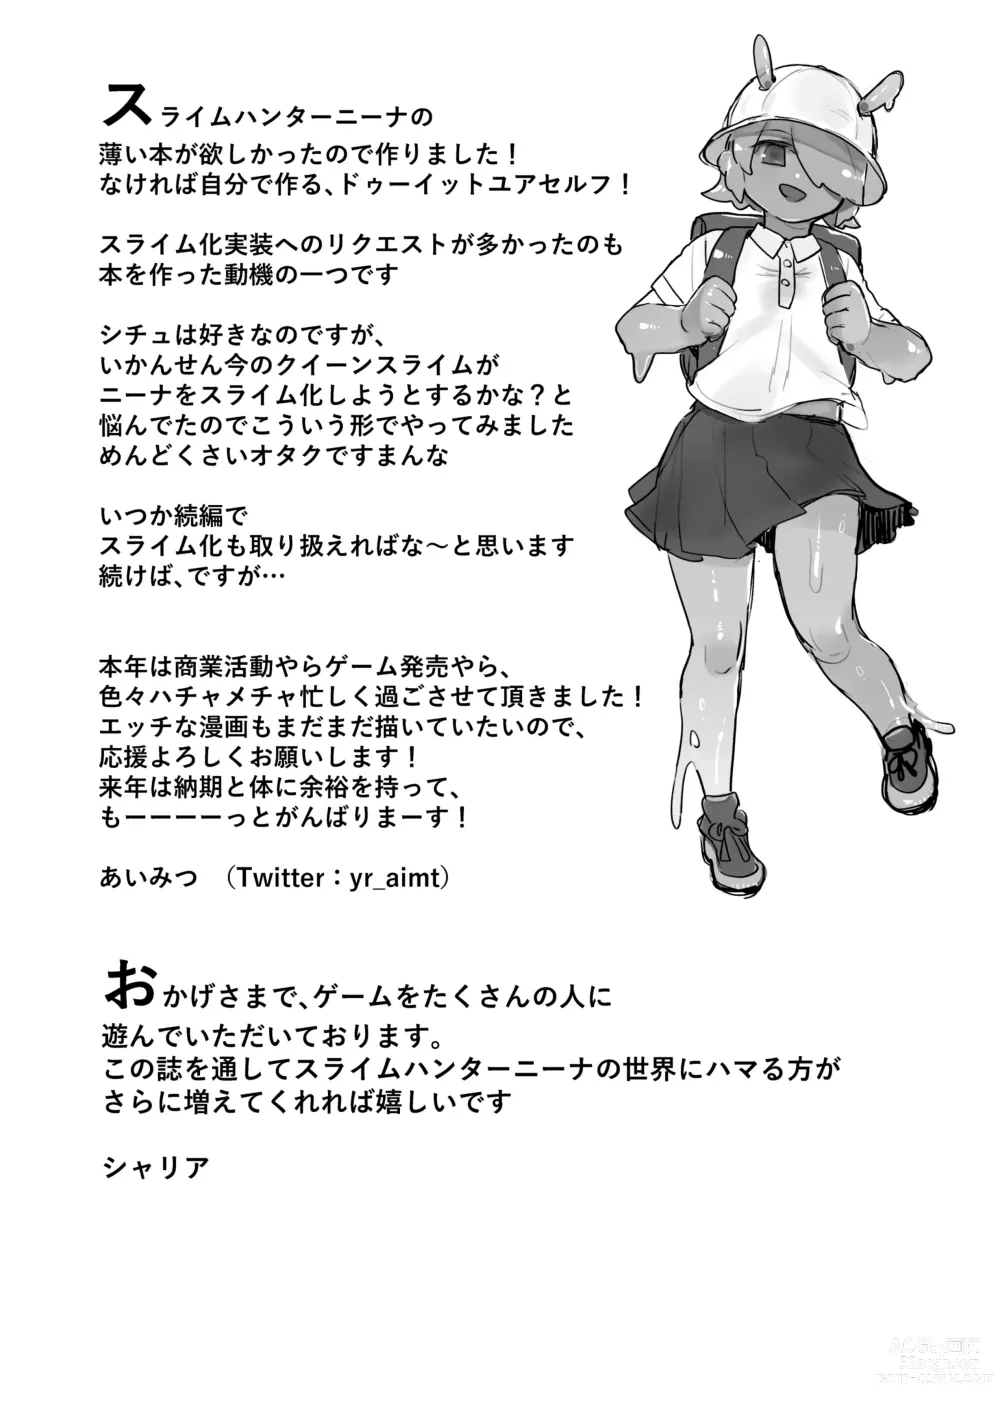 Page 24 of doujinshi Slime Hunter Nina no Juhon (Fa Zin) Vol. 1